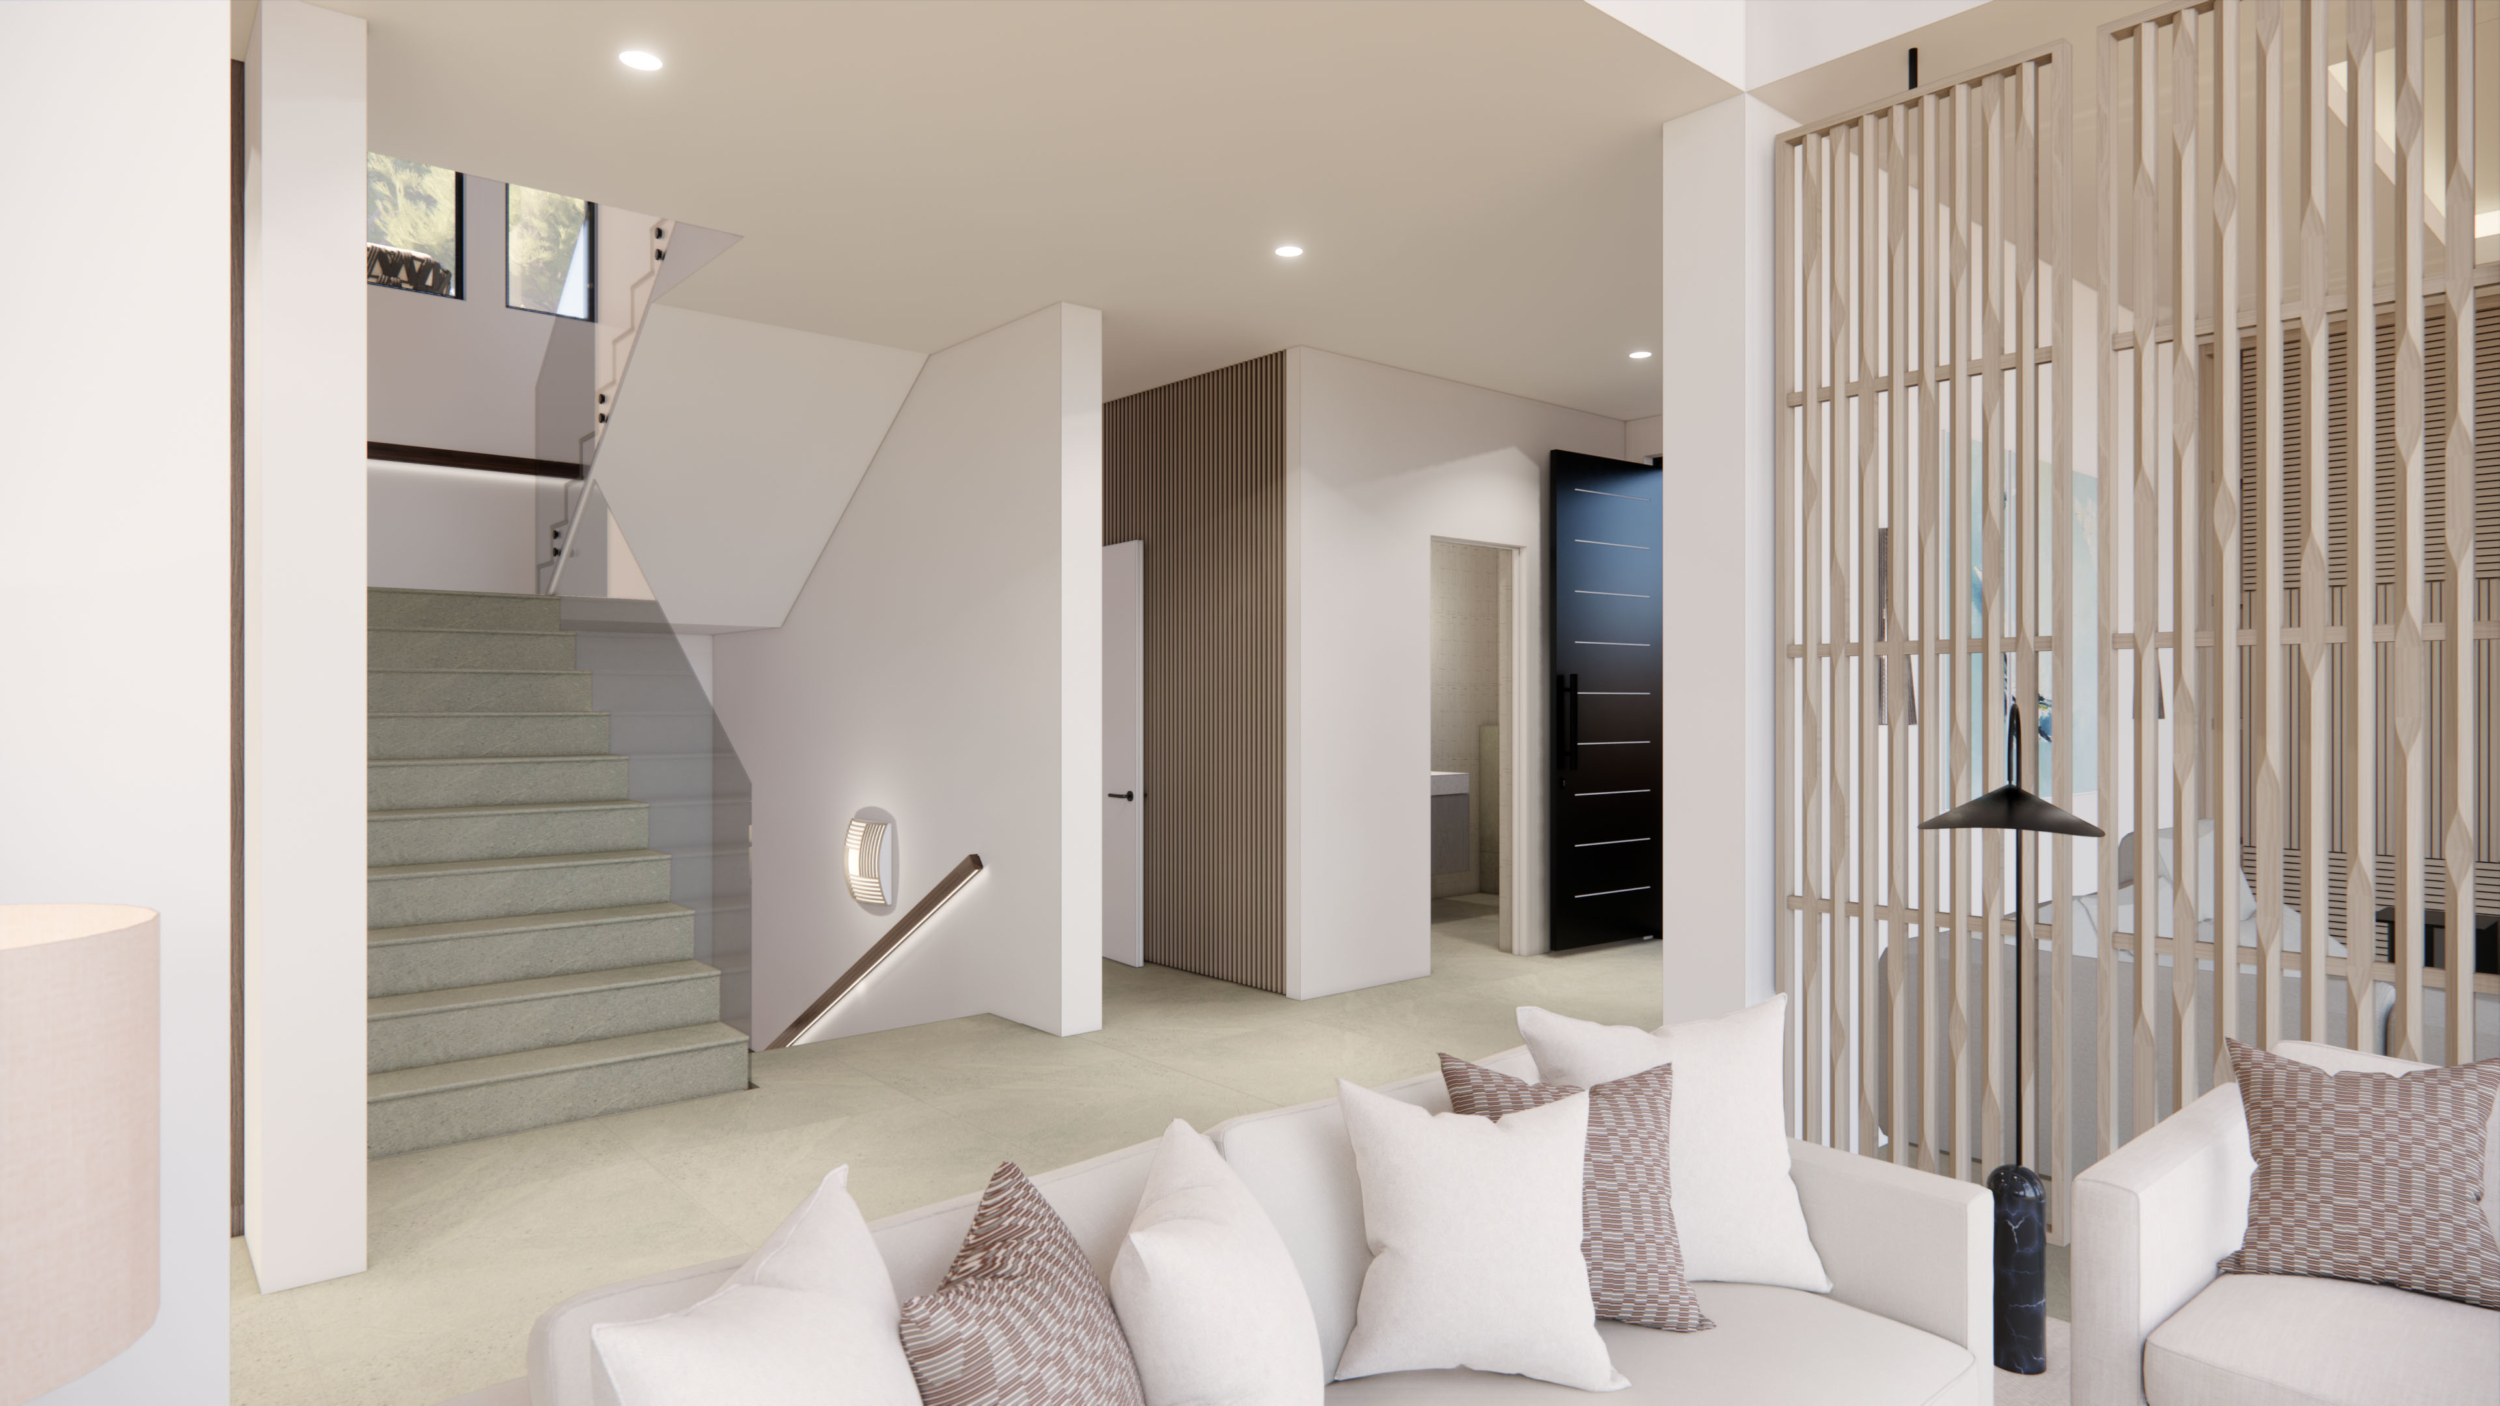 Villa Sapphire, Stairway CGI, Linear CGI Studio